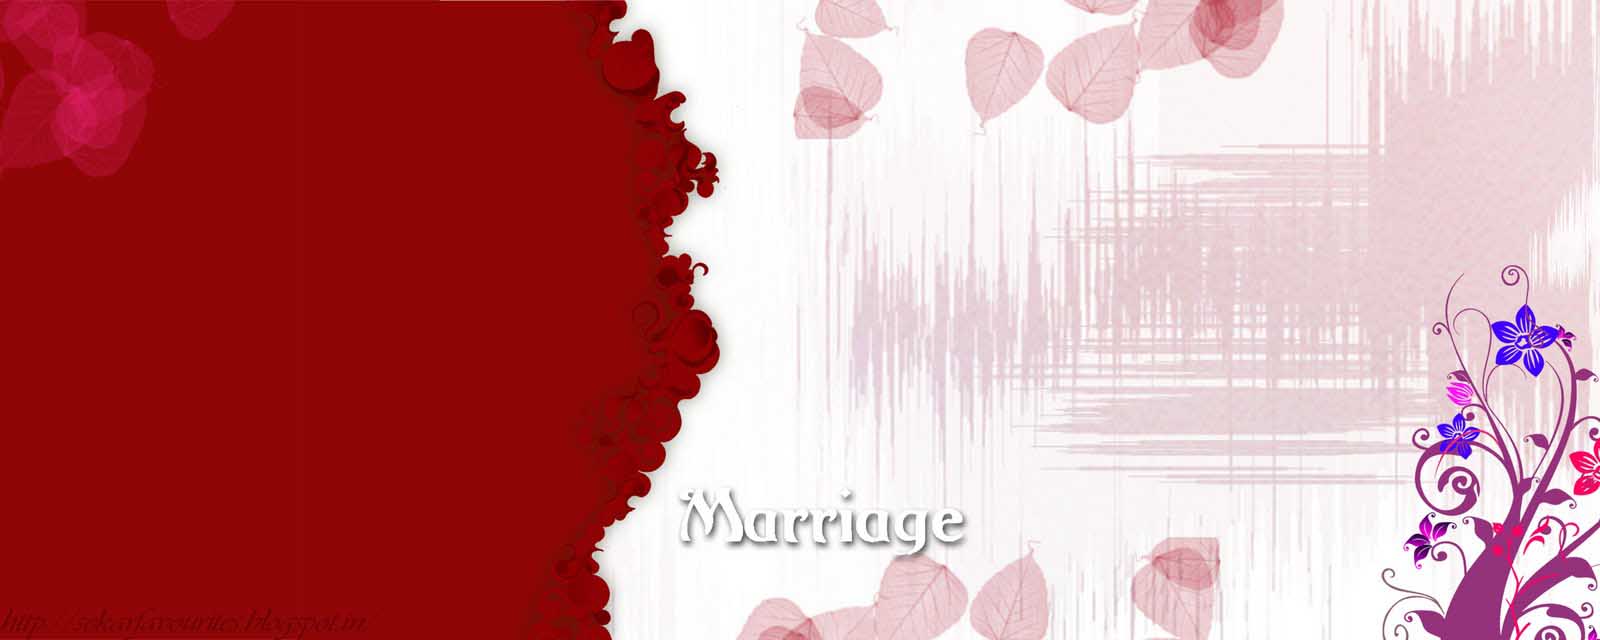 background wedding album cover page design psd